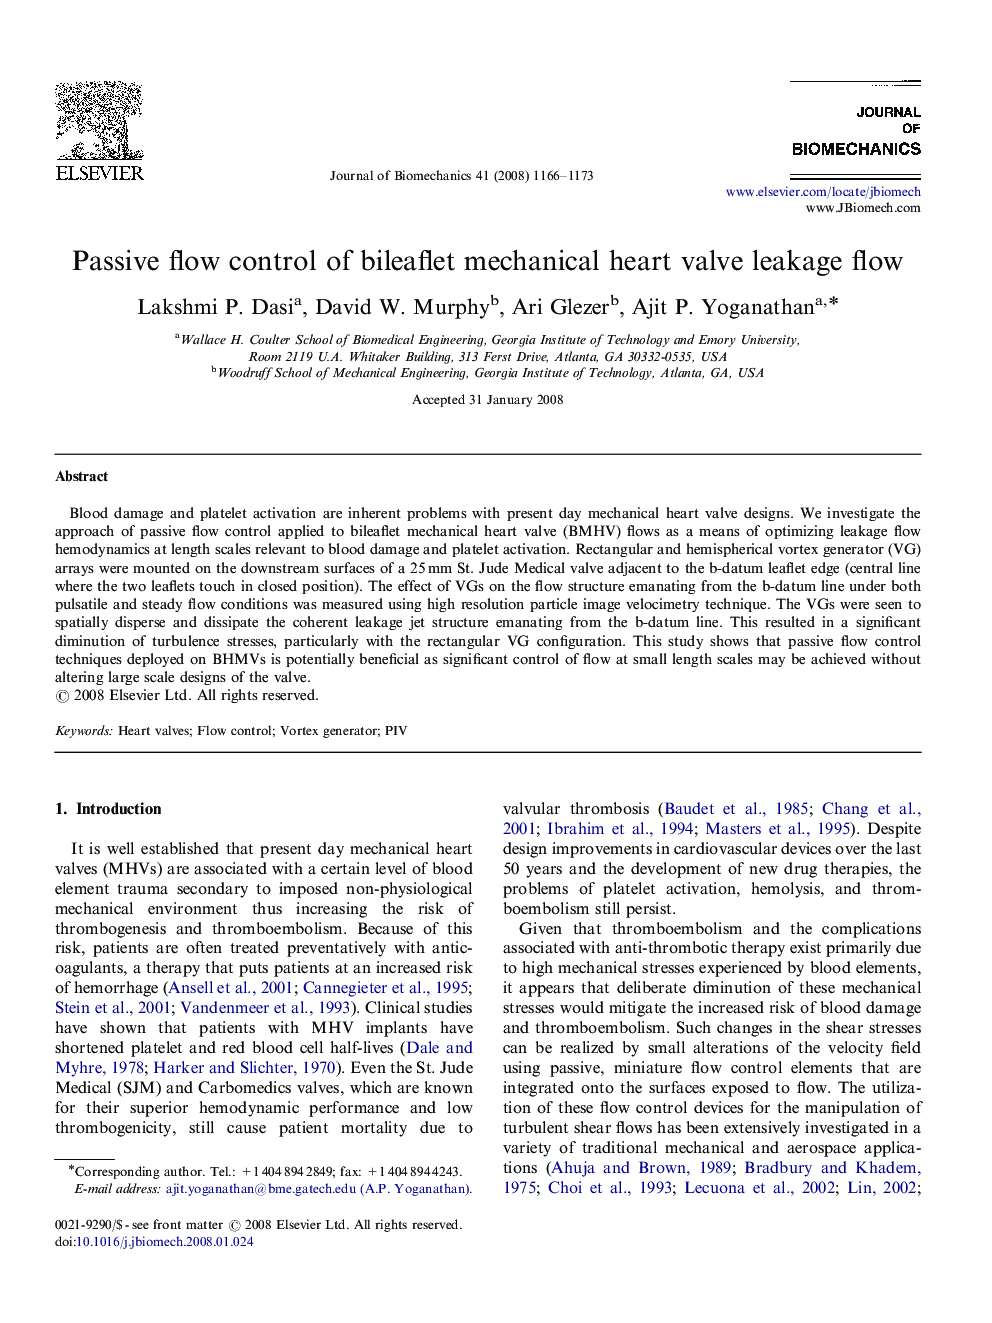 Passive flow control of bileaflet mechanical heart valve leakage flow